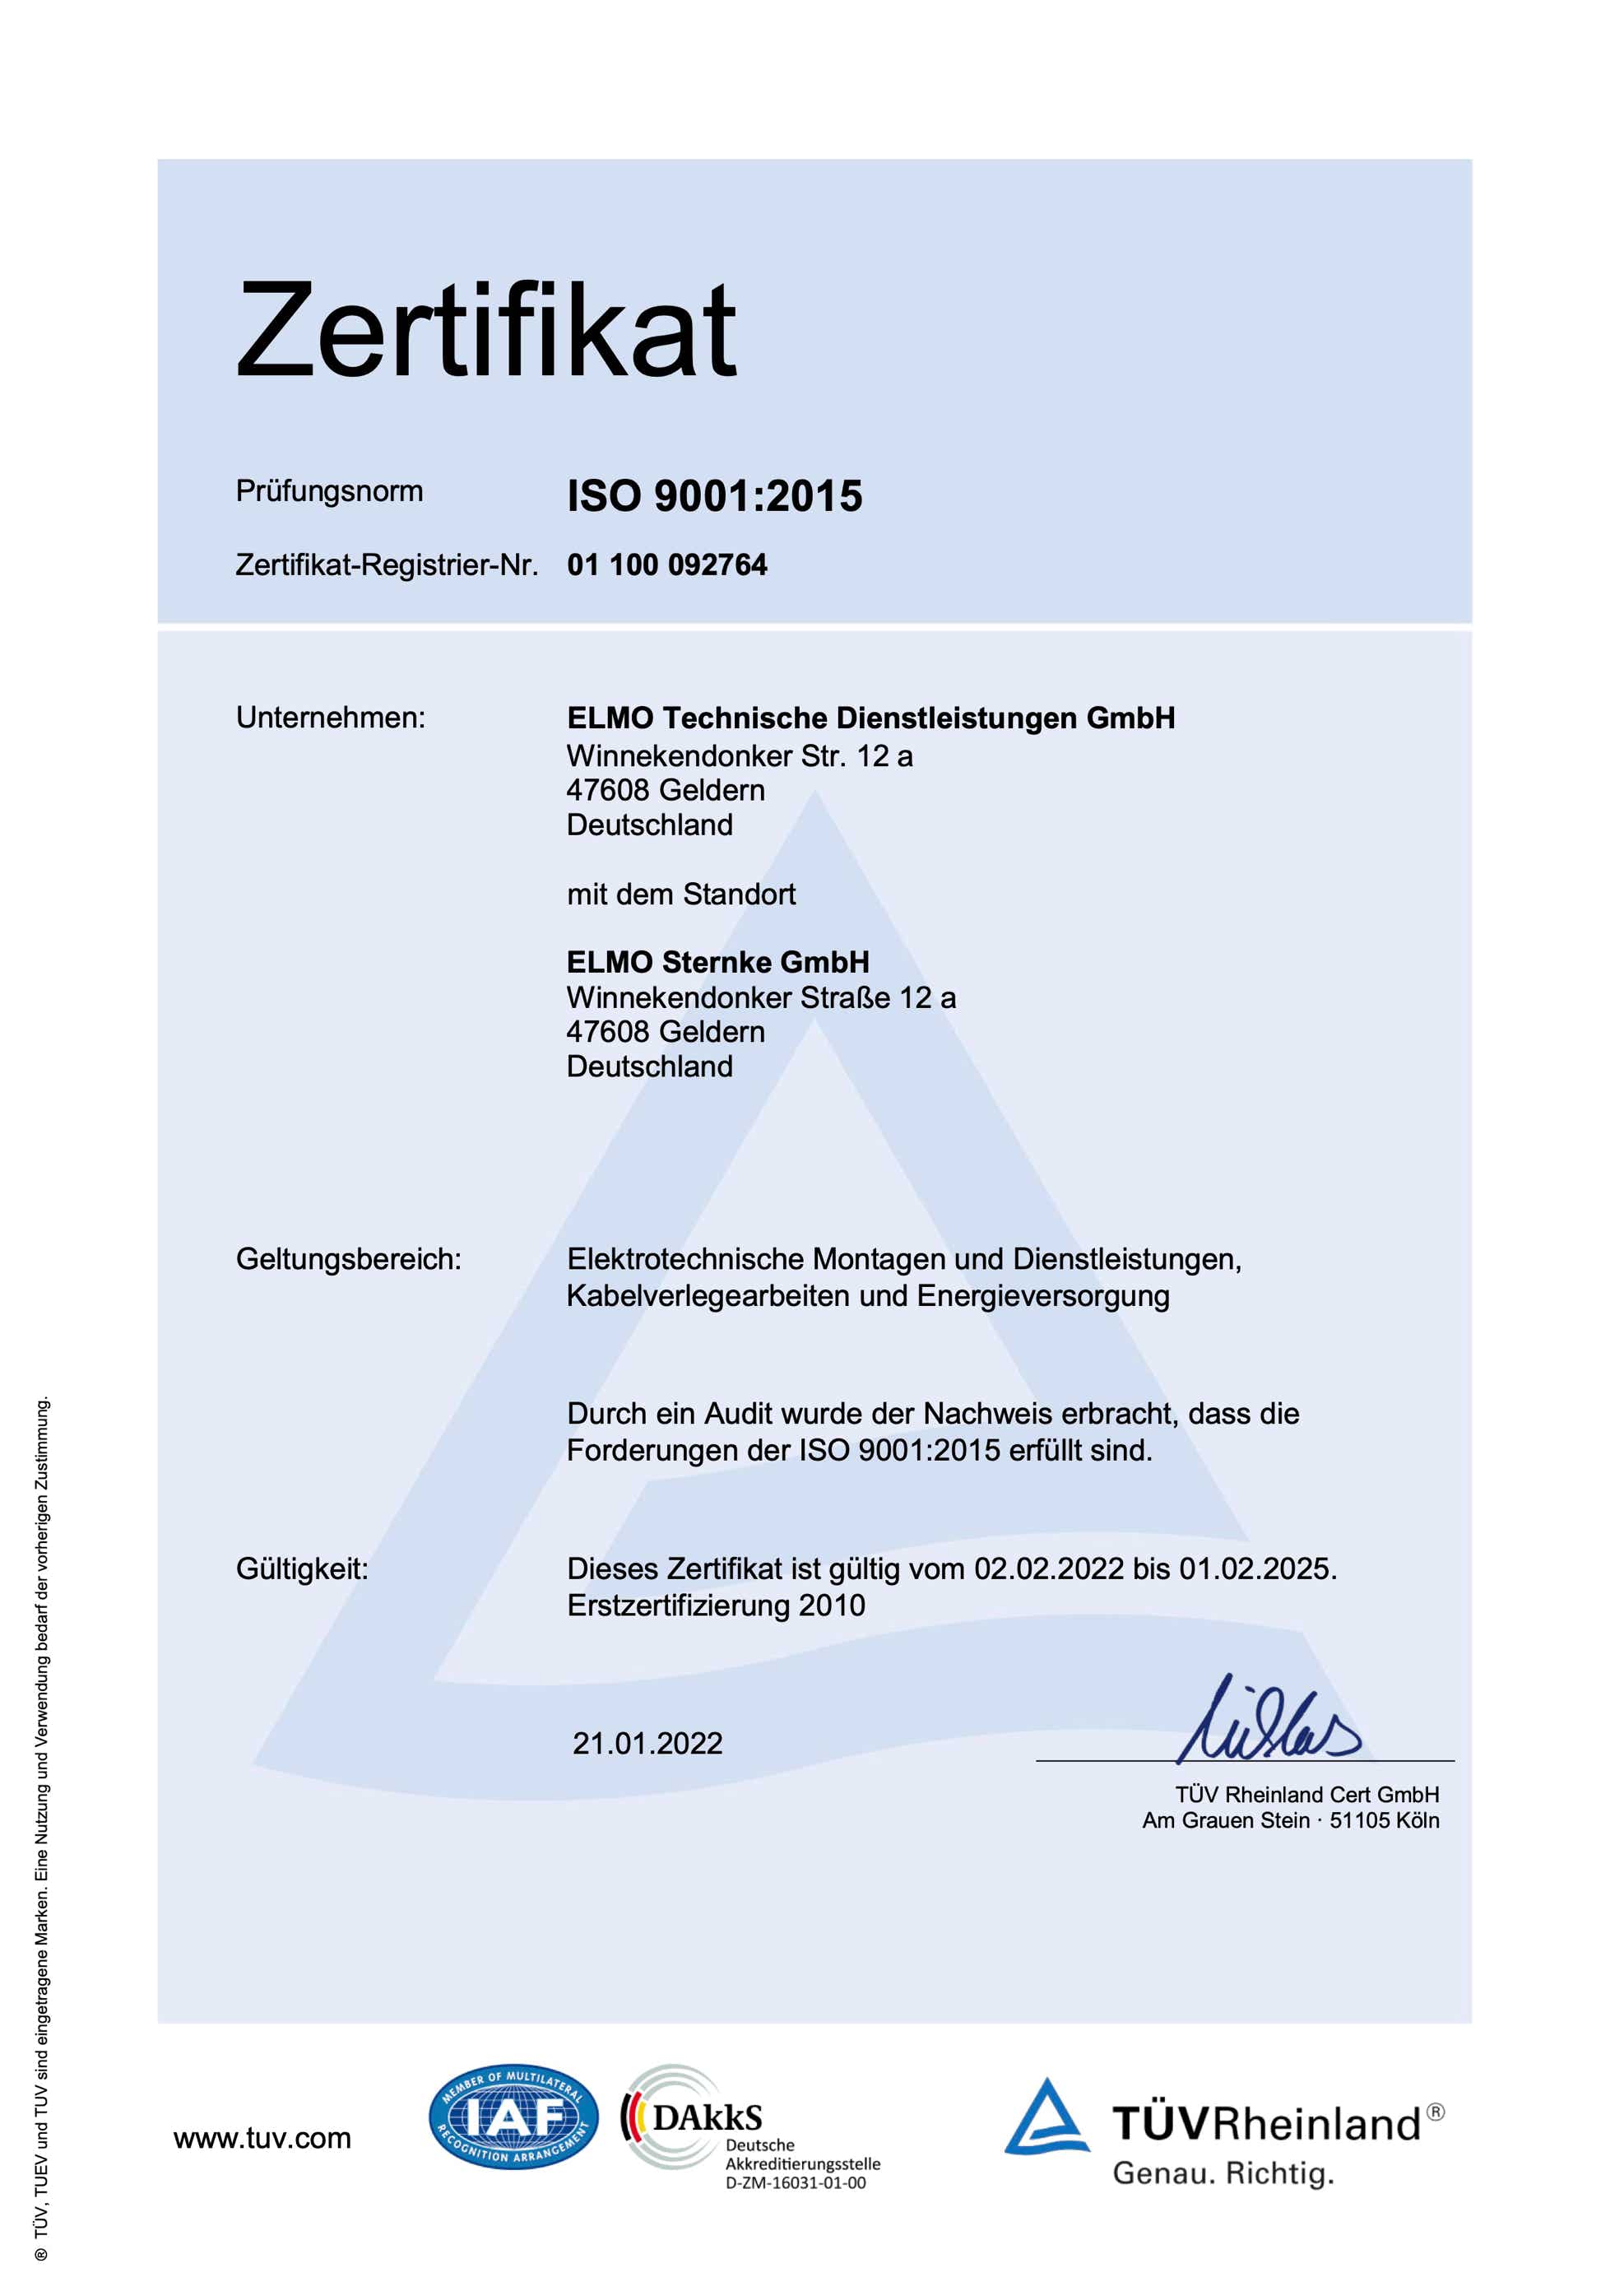 Abbildung ISO 9001:2015 Zertifikat